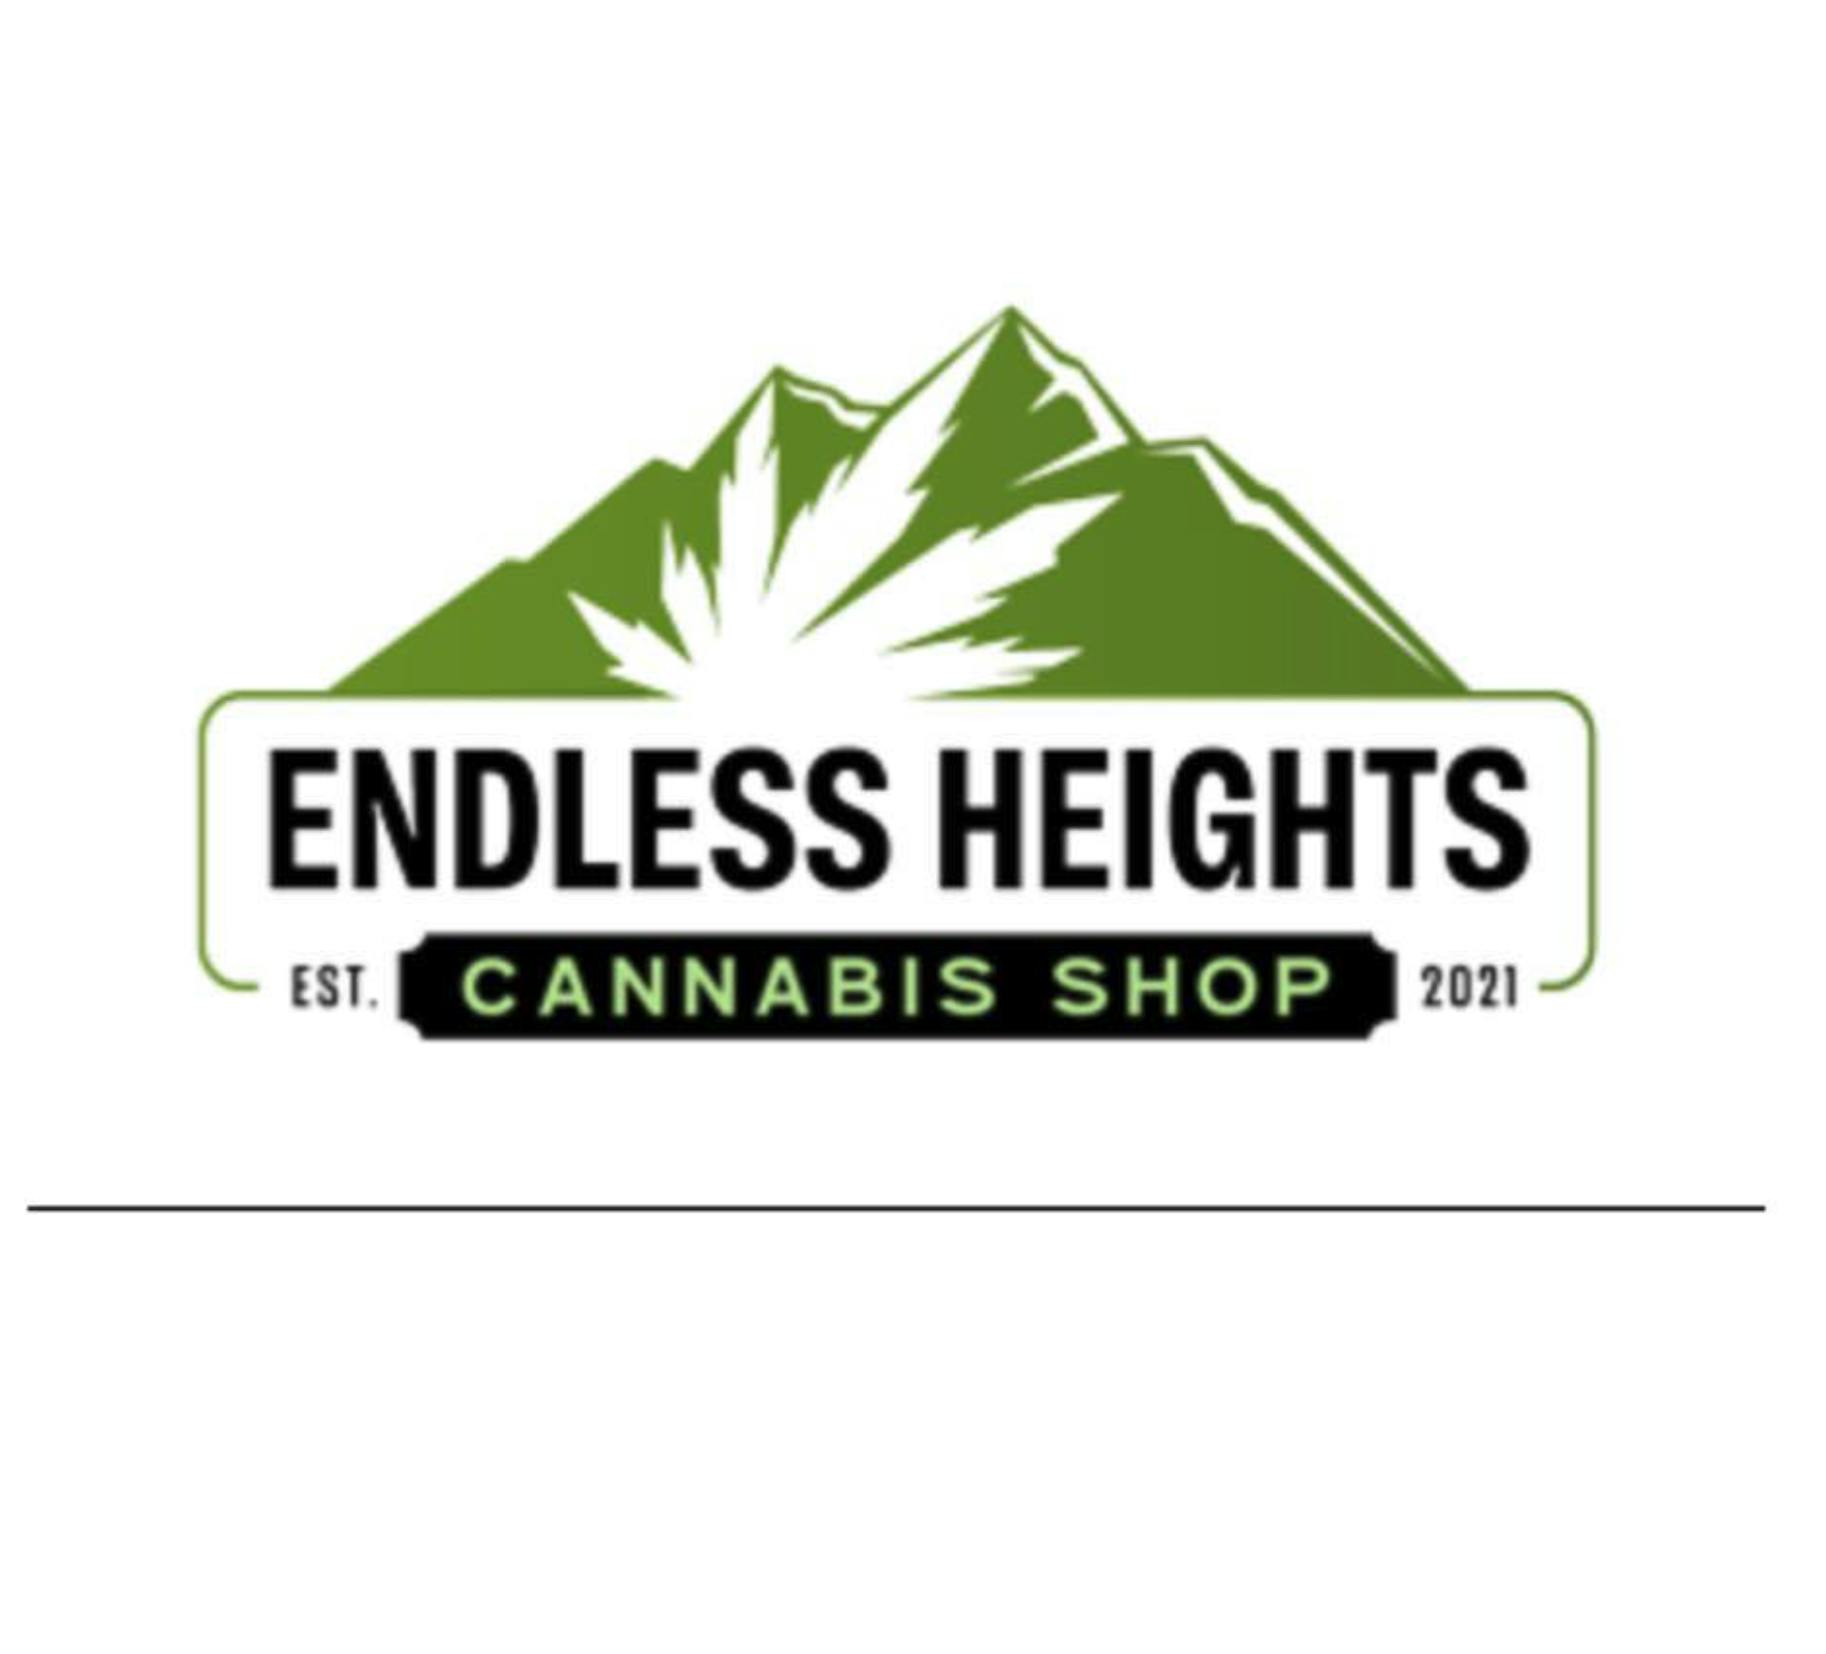 Endless Heights Cannabis Shop West logo